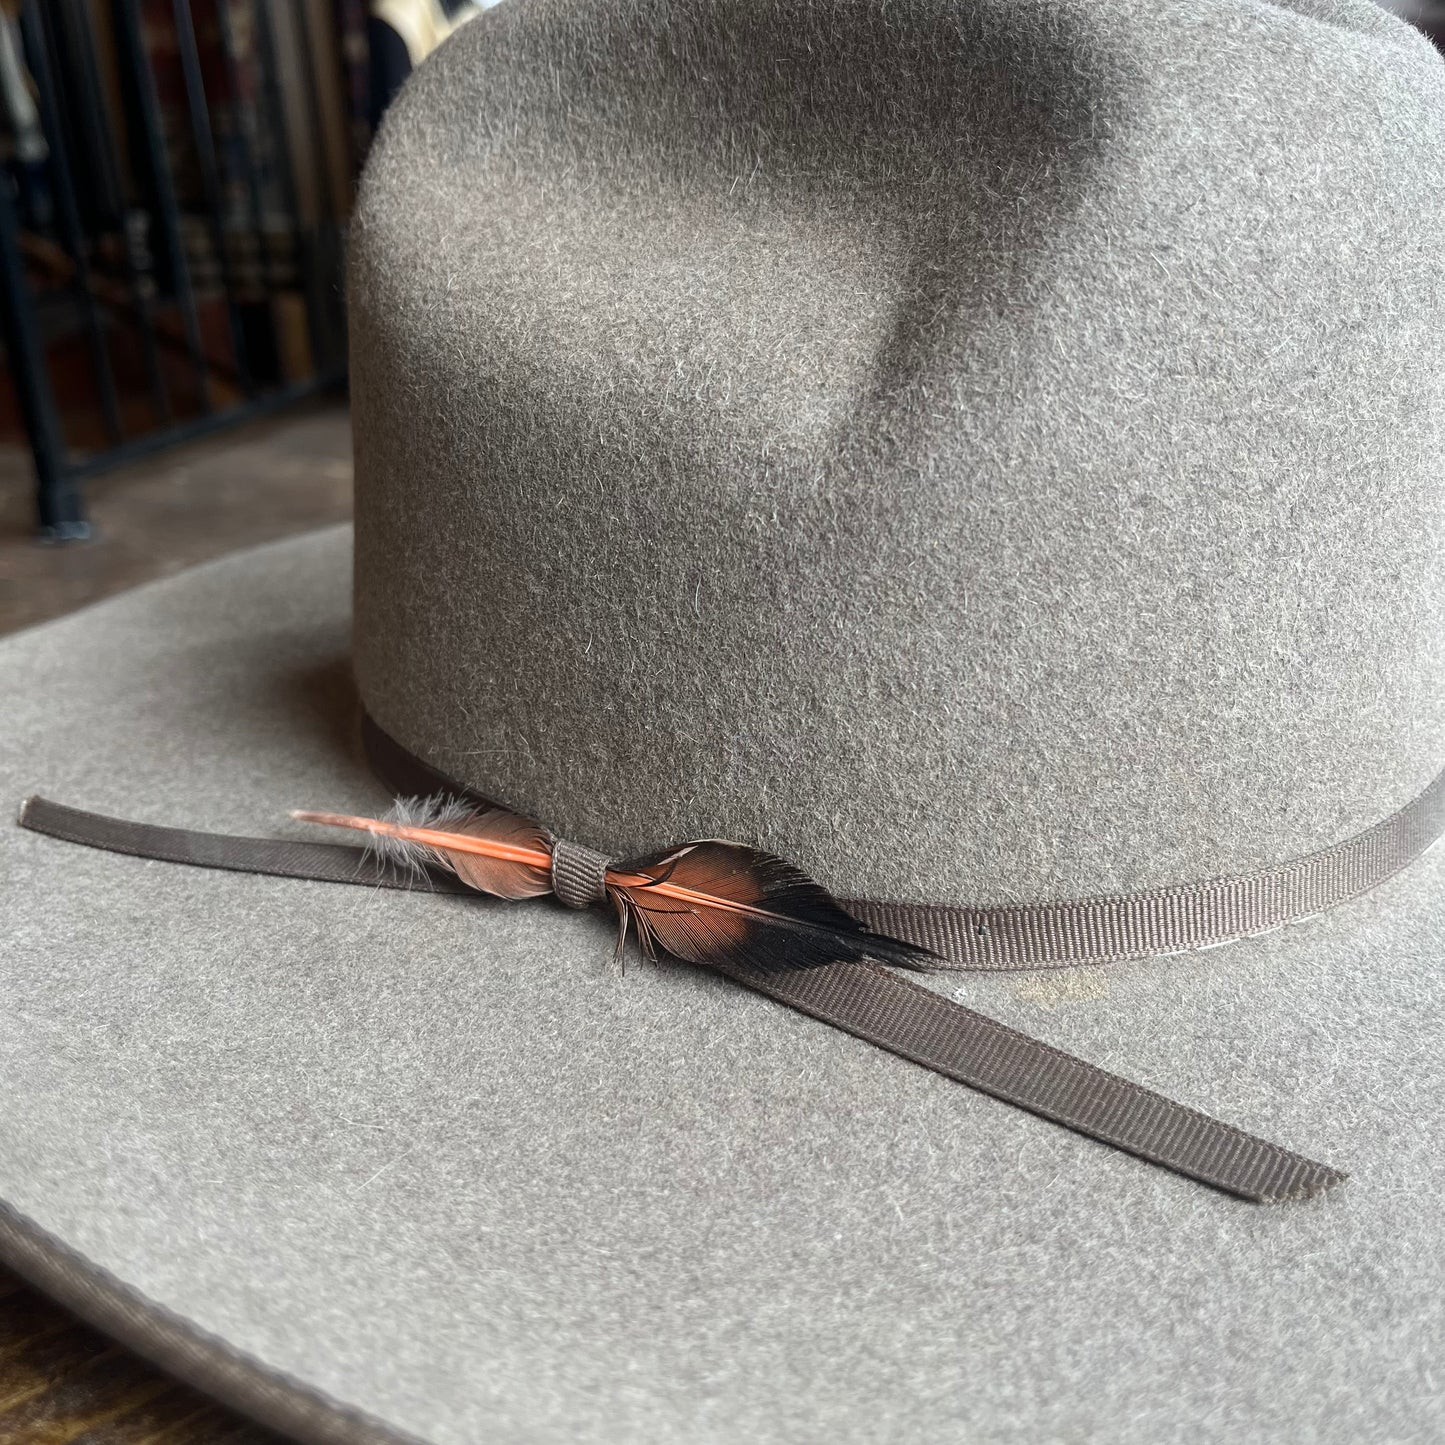 6X Serratelli Hat Co Gray Cowboy Hat 7